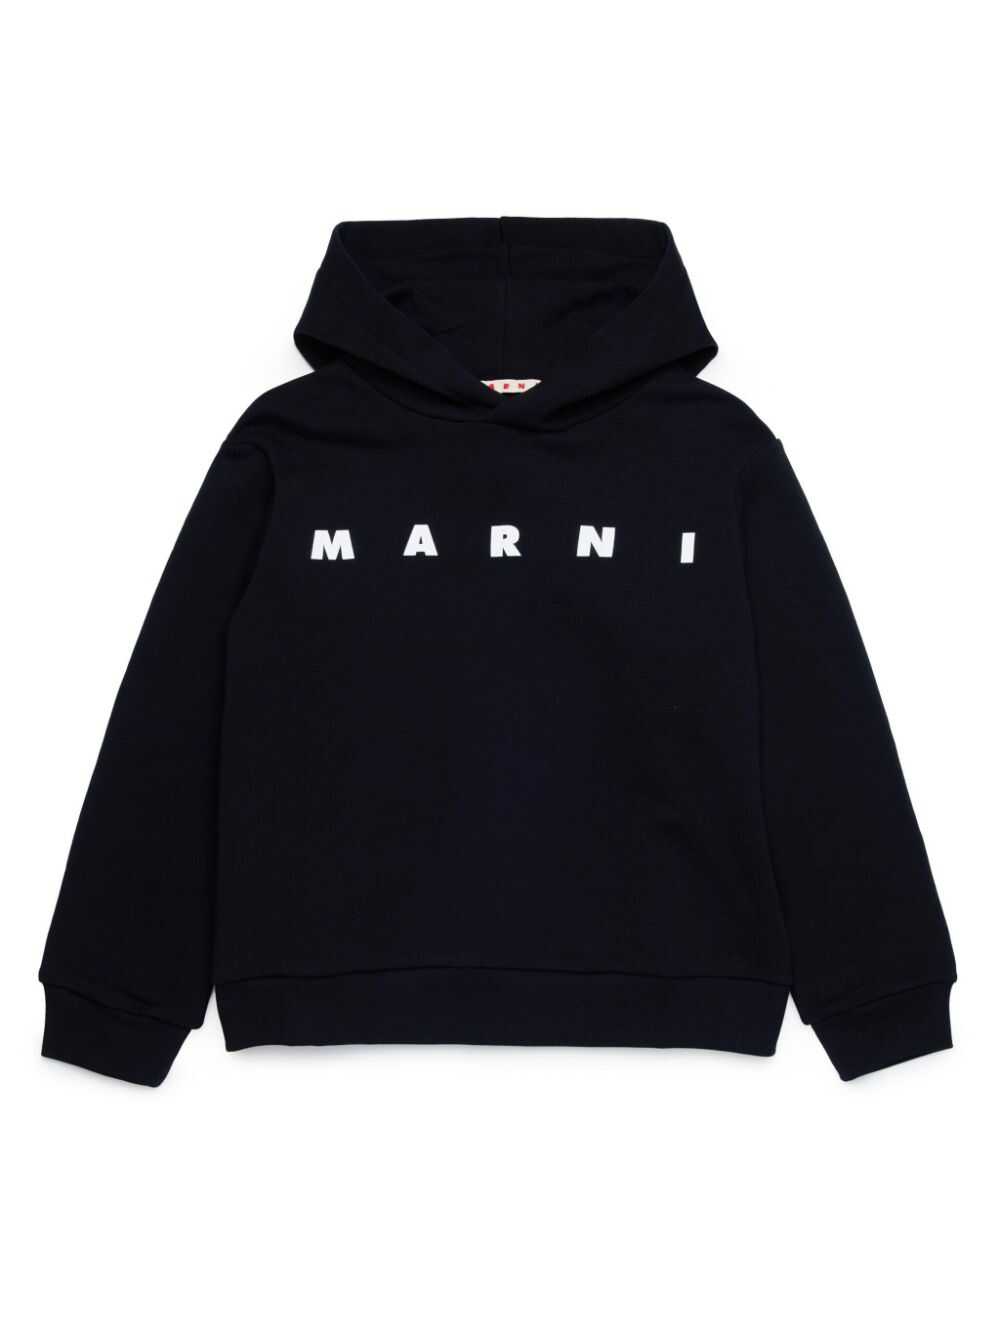 Marni Marni Sweaters Black Black